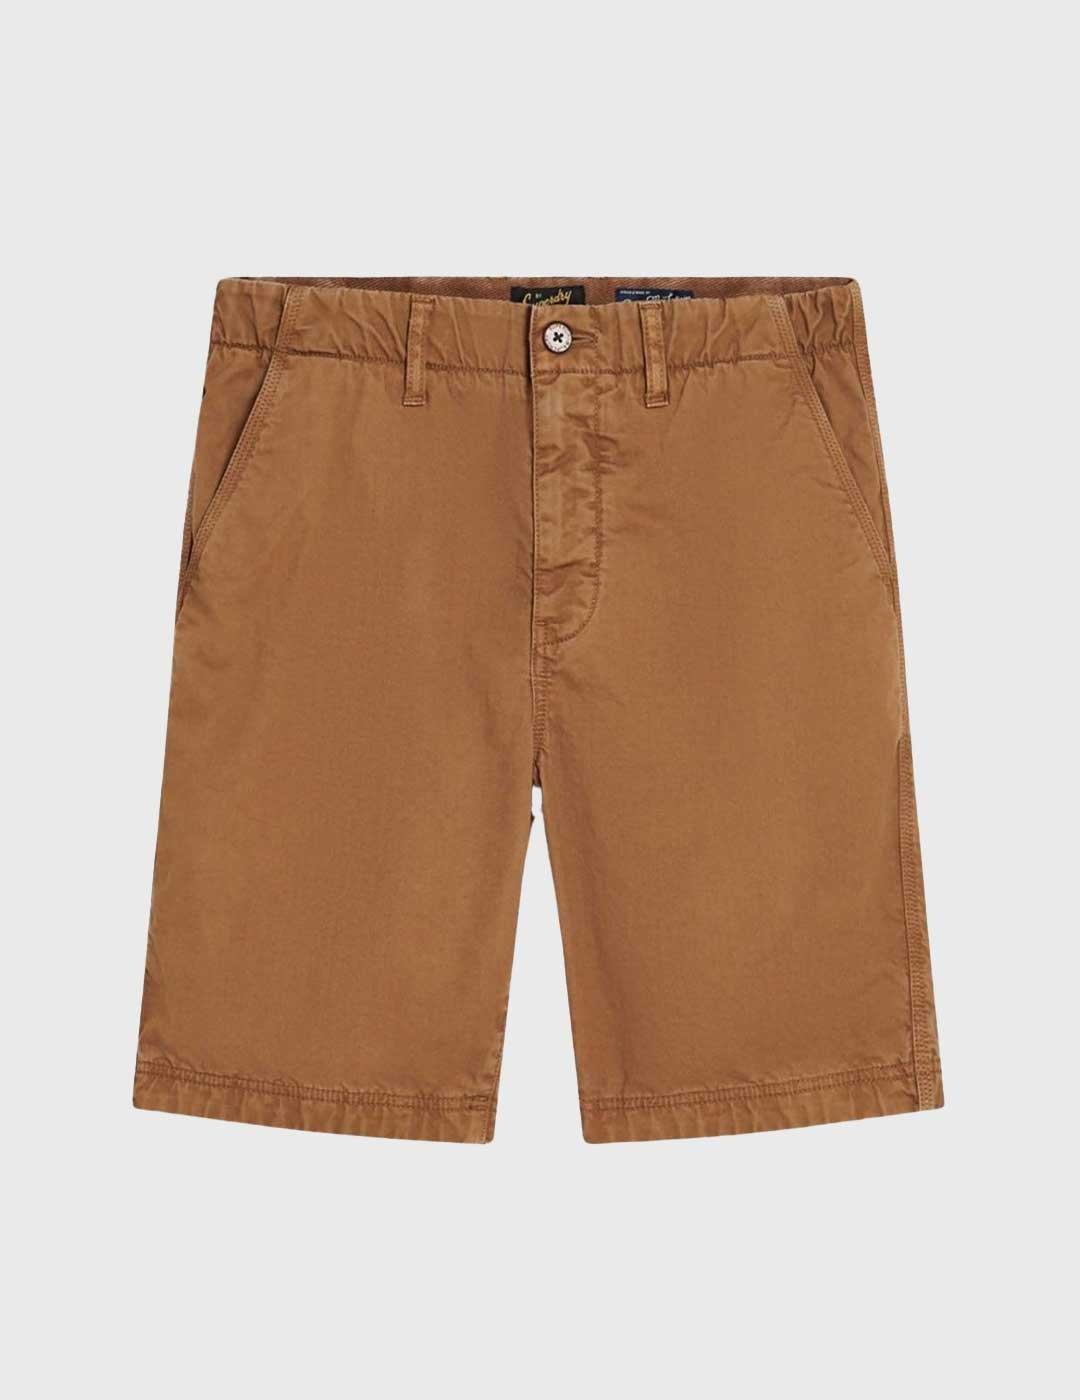 Superdry Vintage International Short Pantalón corto marrón